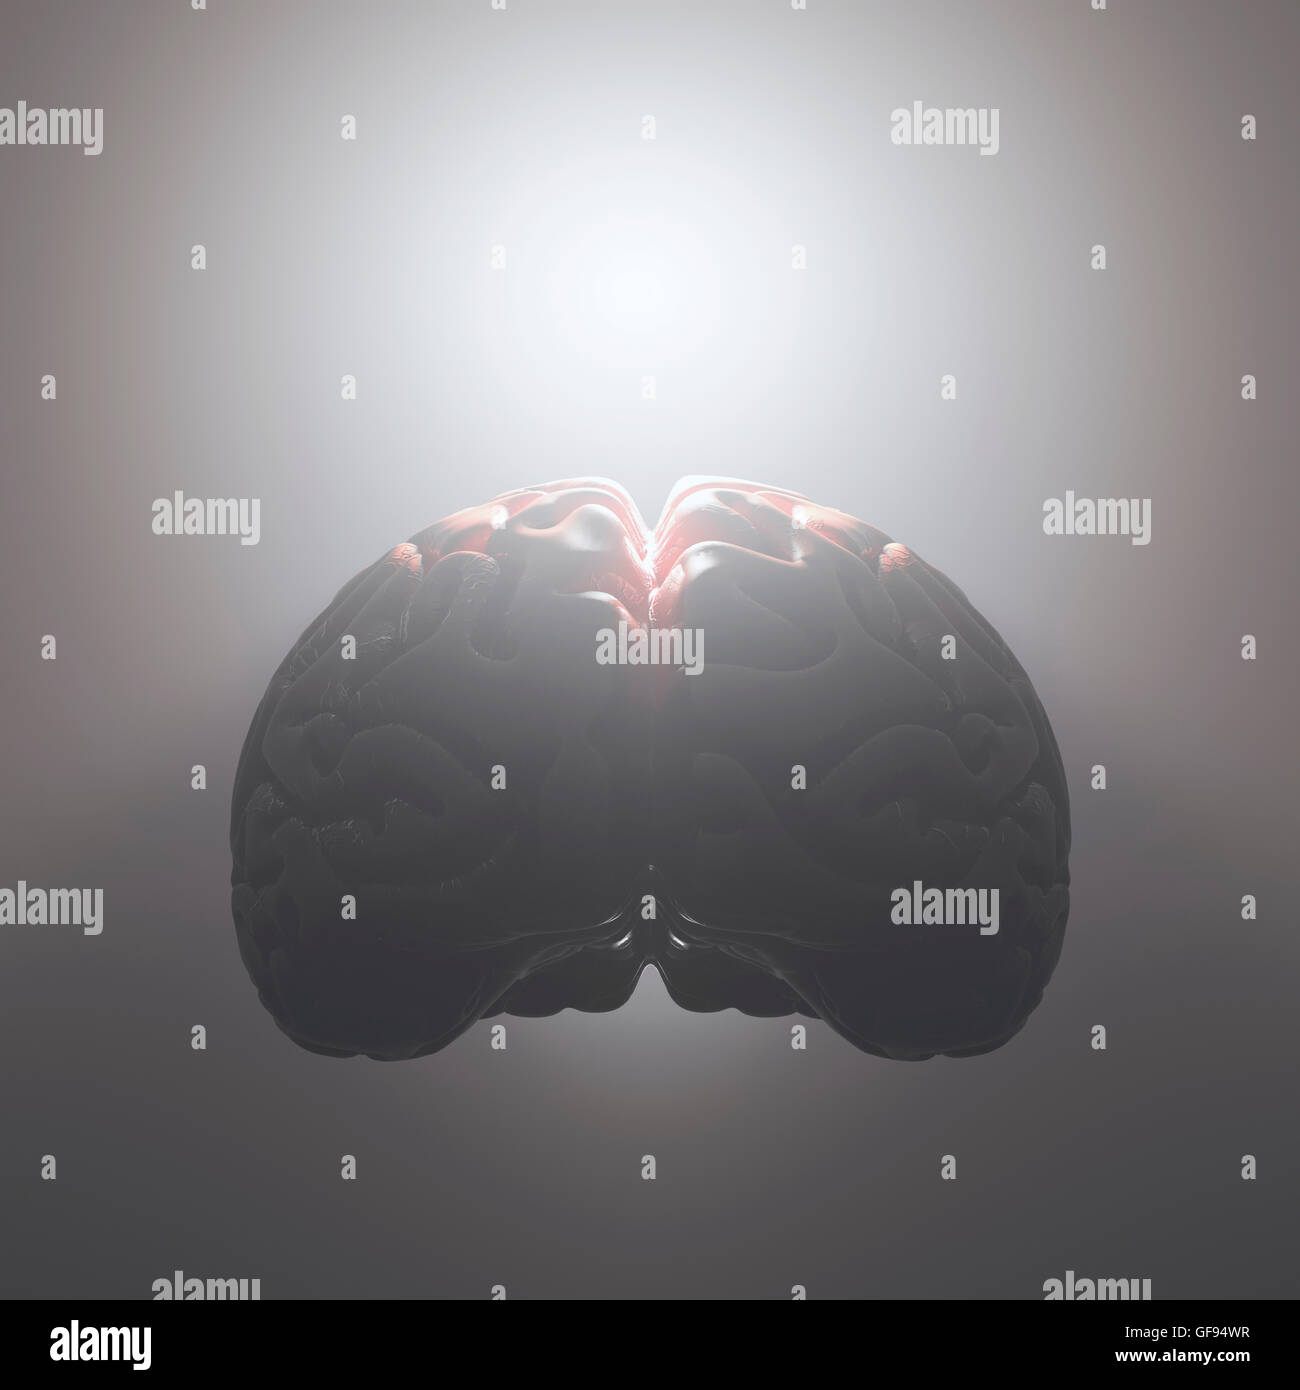 Human brain against grey background, illustration. Stock Photo